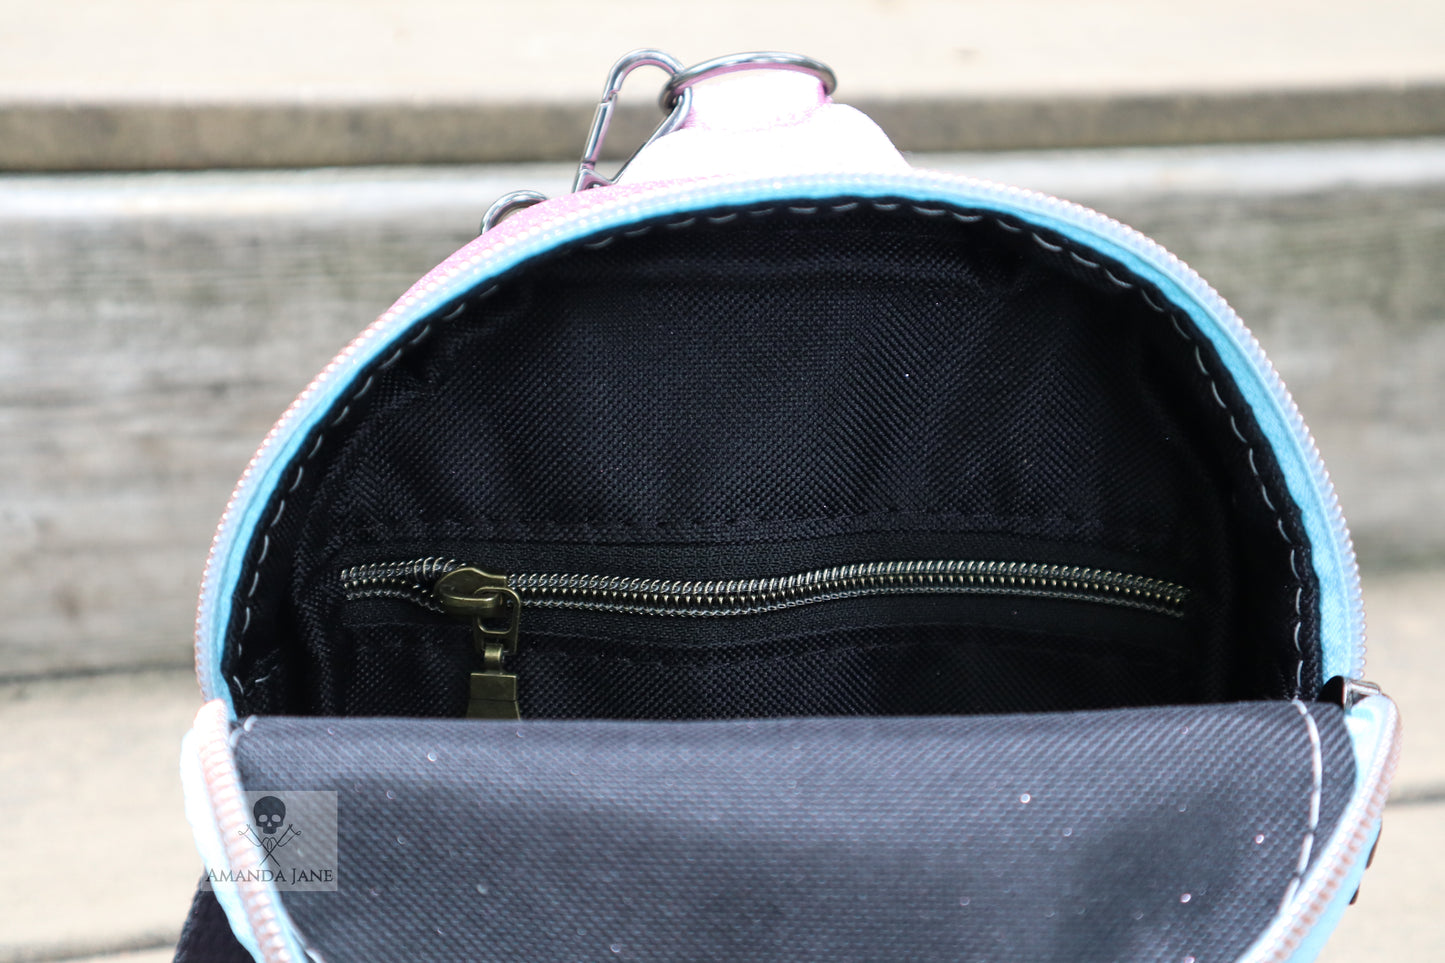 Handcrafted purse backpack shoulder sling gold moths - SMALL size